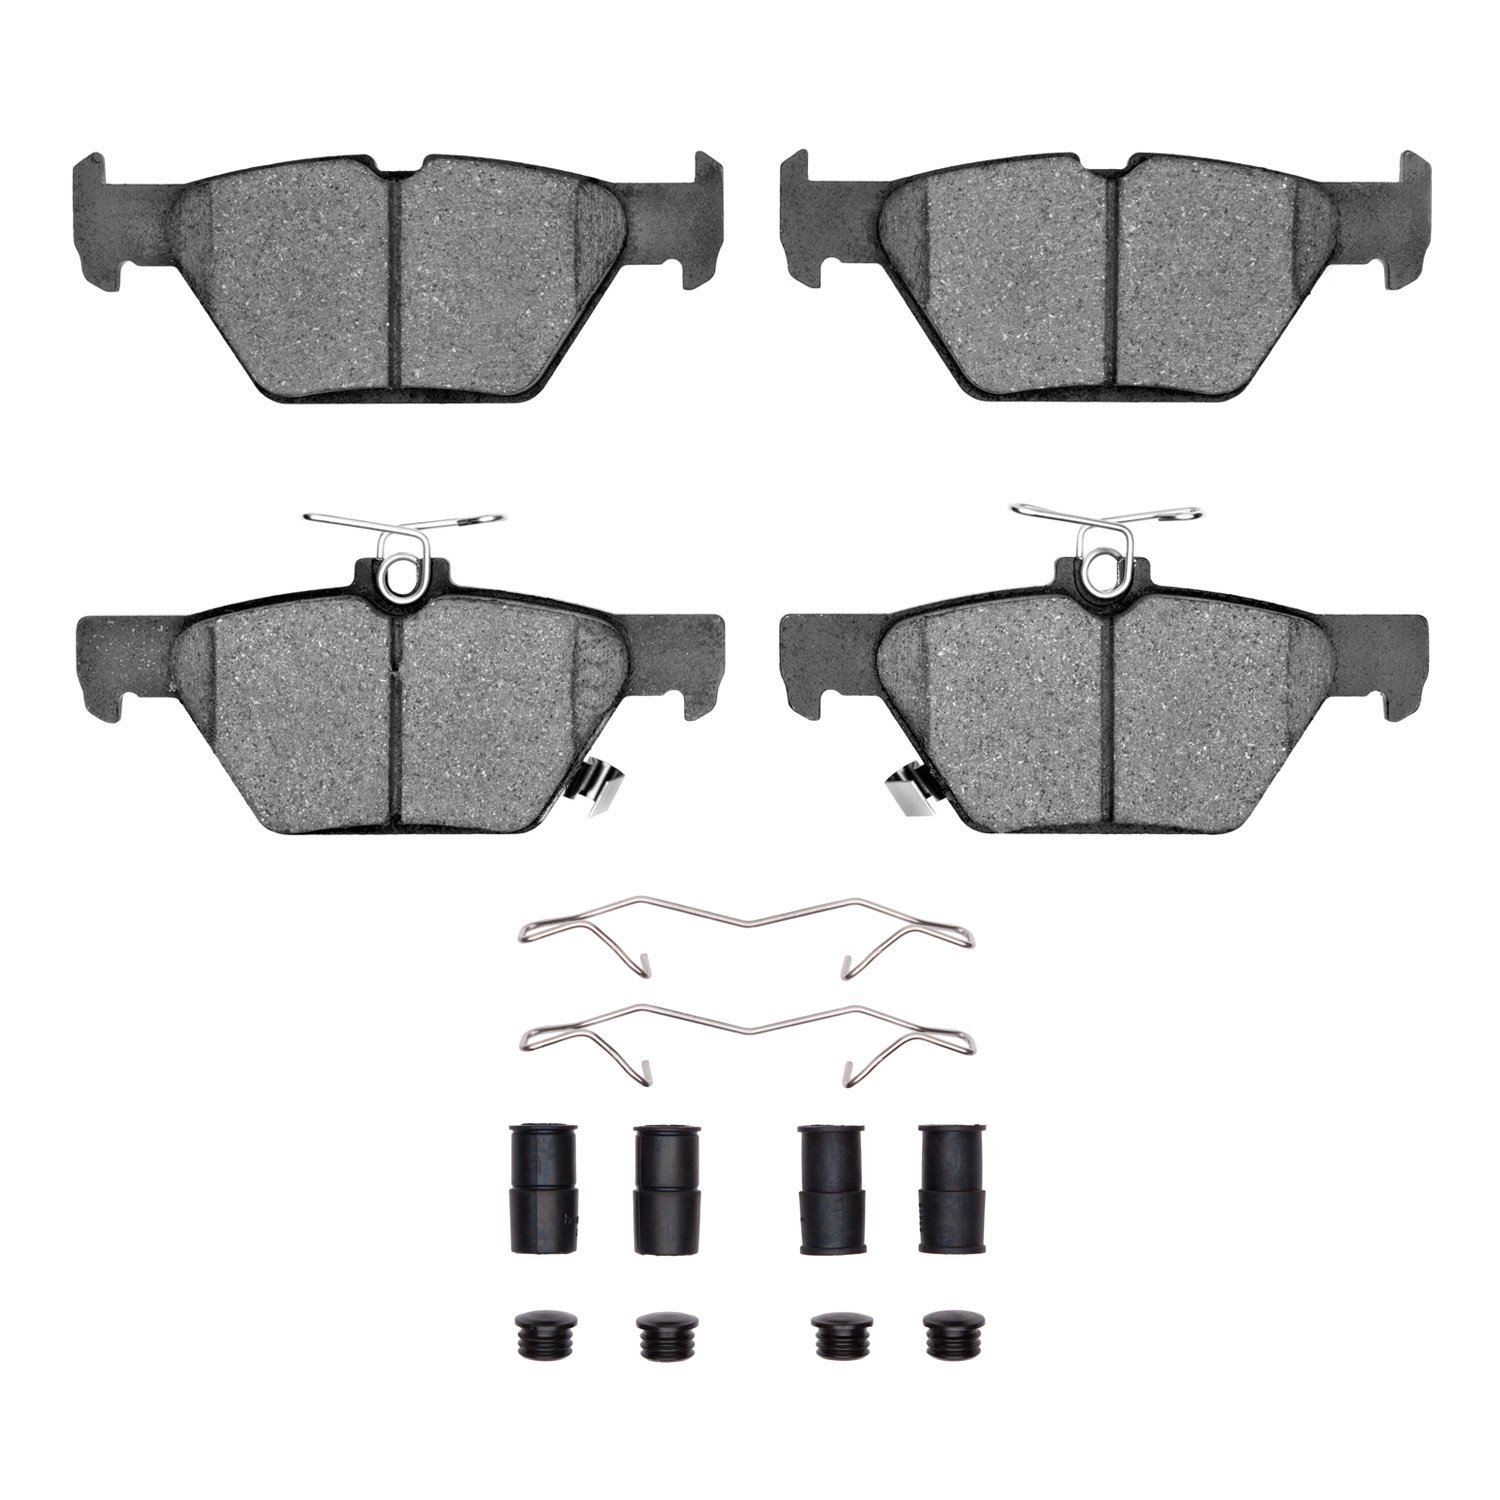 1551-1808-01 5000 Advanced Ceramic Brake Pads & Hardware Kit, Fits Select Subaru, Position: Rear